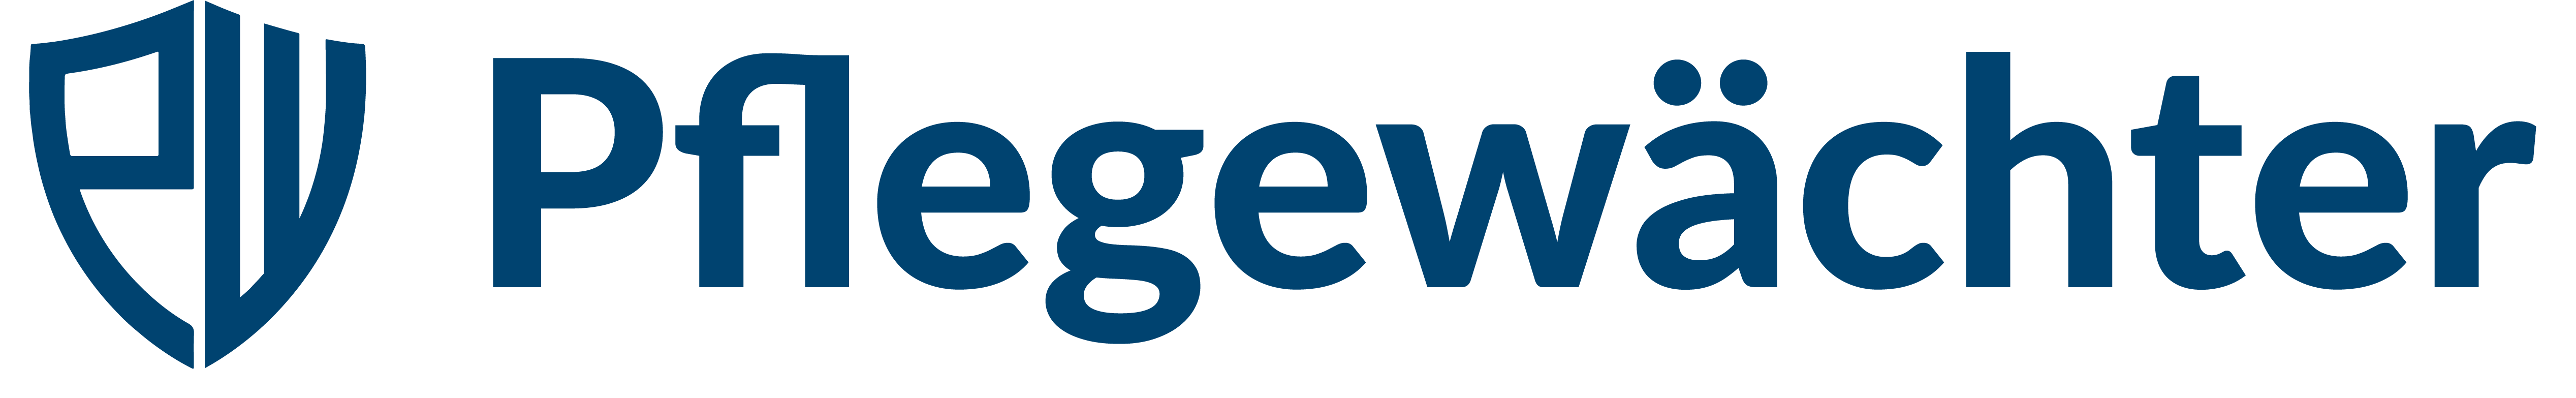 Pflegewaechter Logo